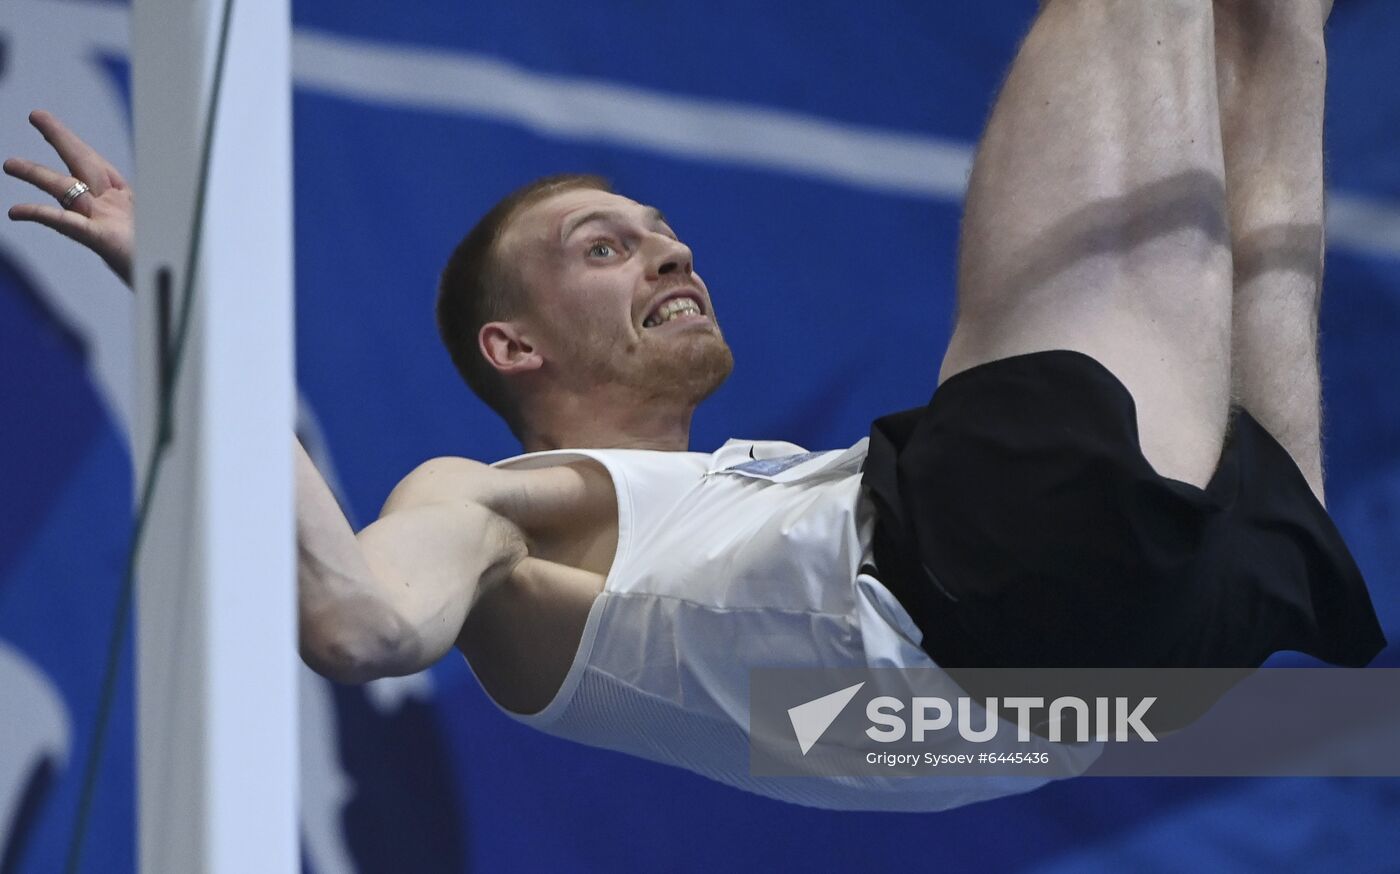 Russia High Jump Сontest Men - Women